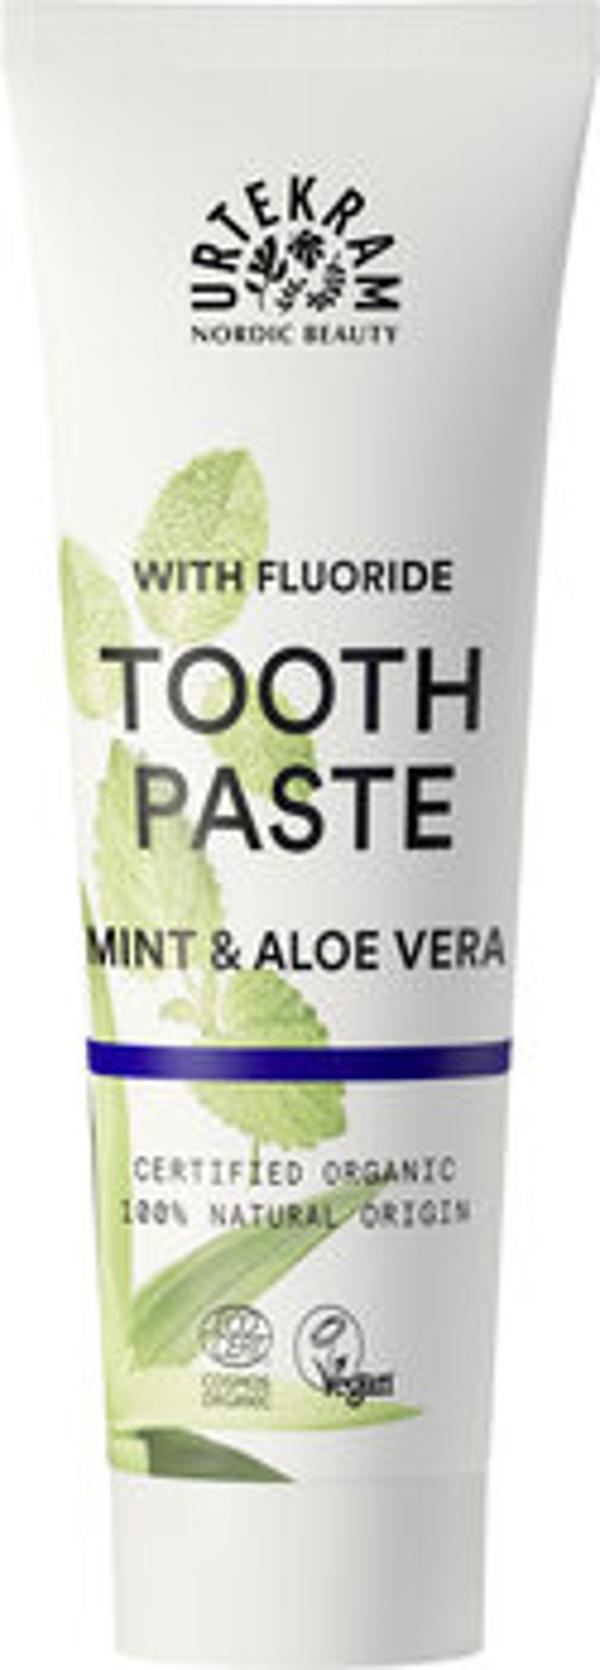 Produktfoto zu Toothpaste Mint Aloe Vera